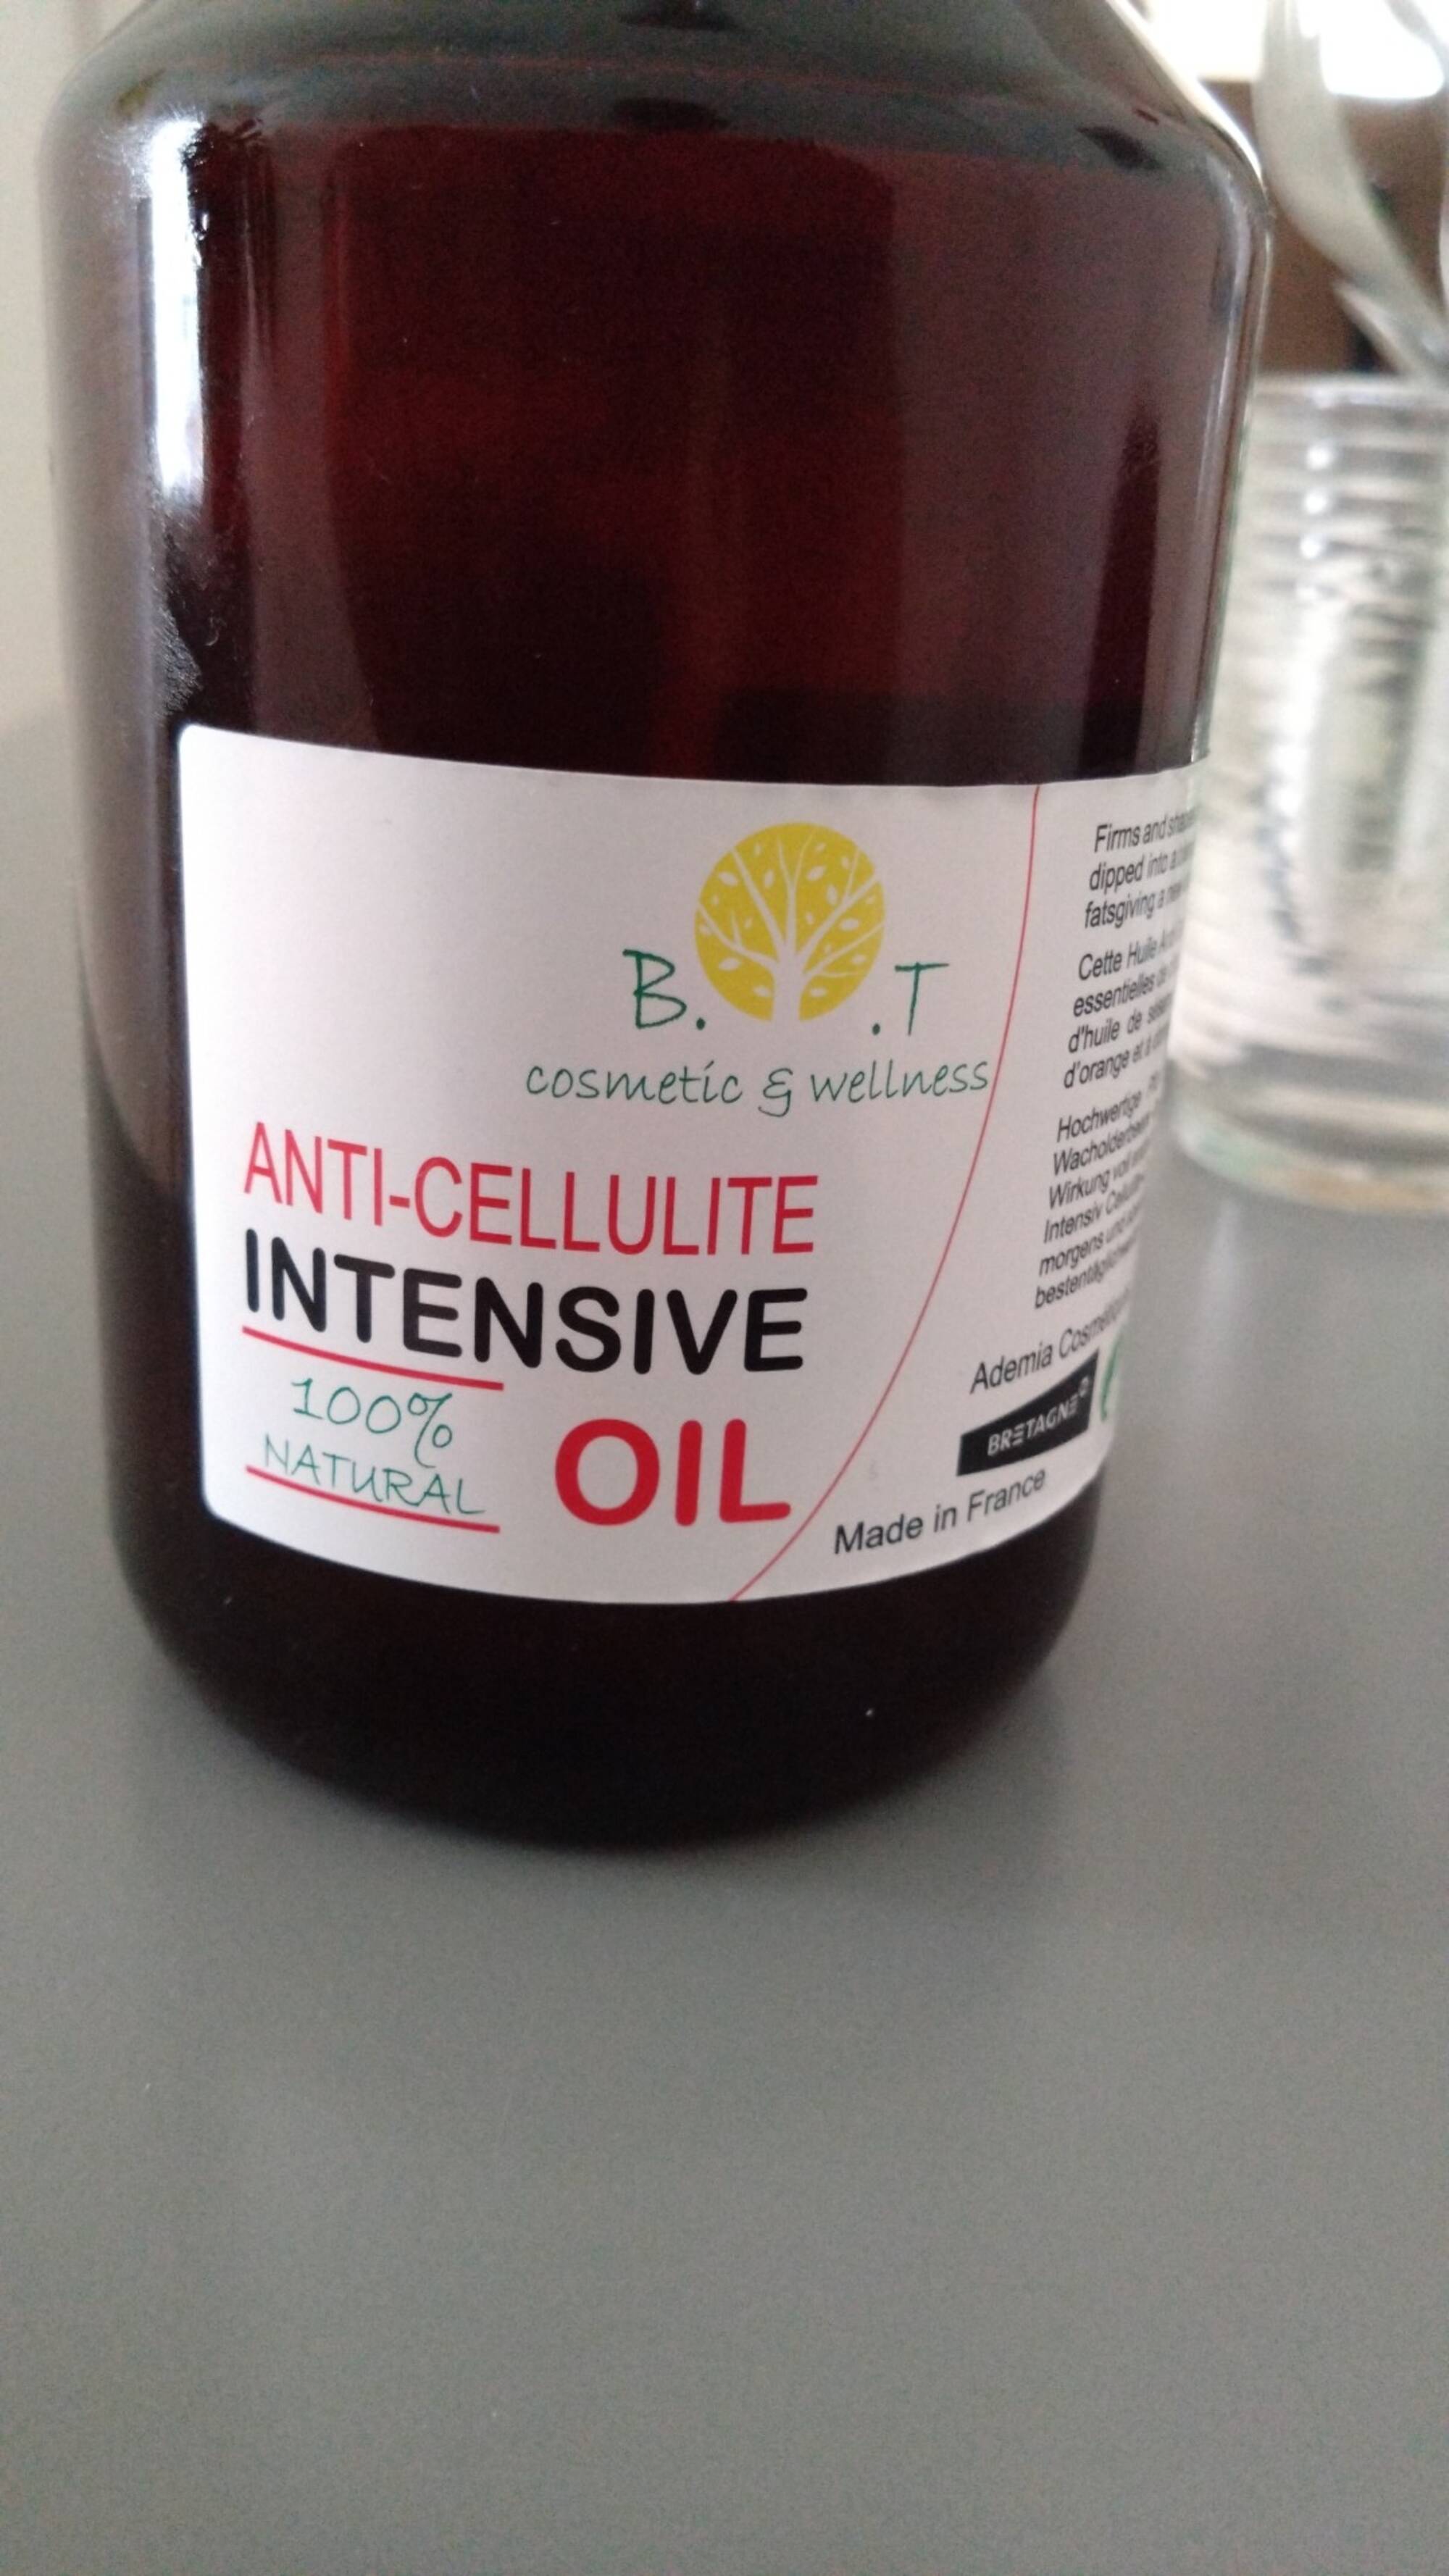 B.O.T COSMETIC & WELLNESS - Anti-cellulite intensive oil